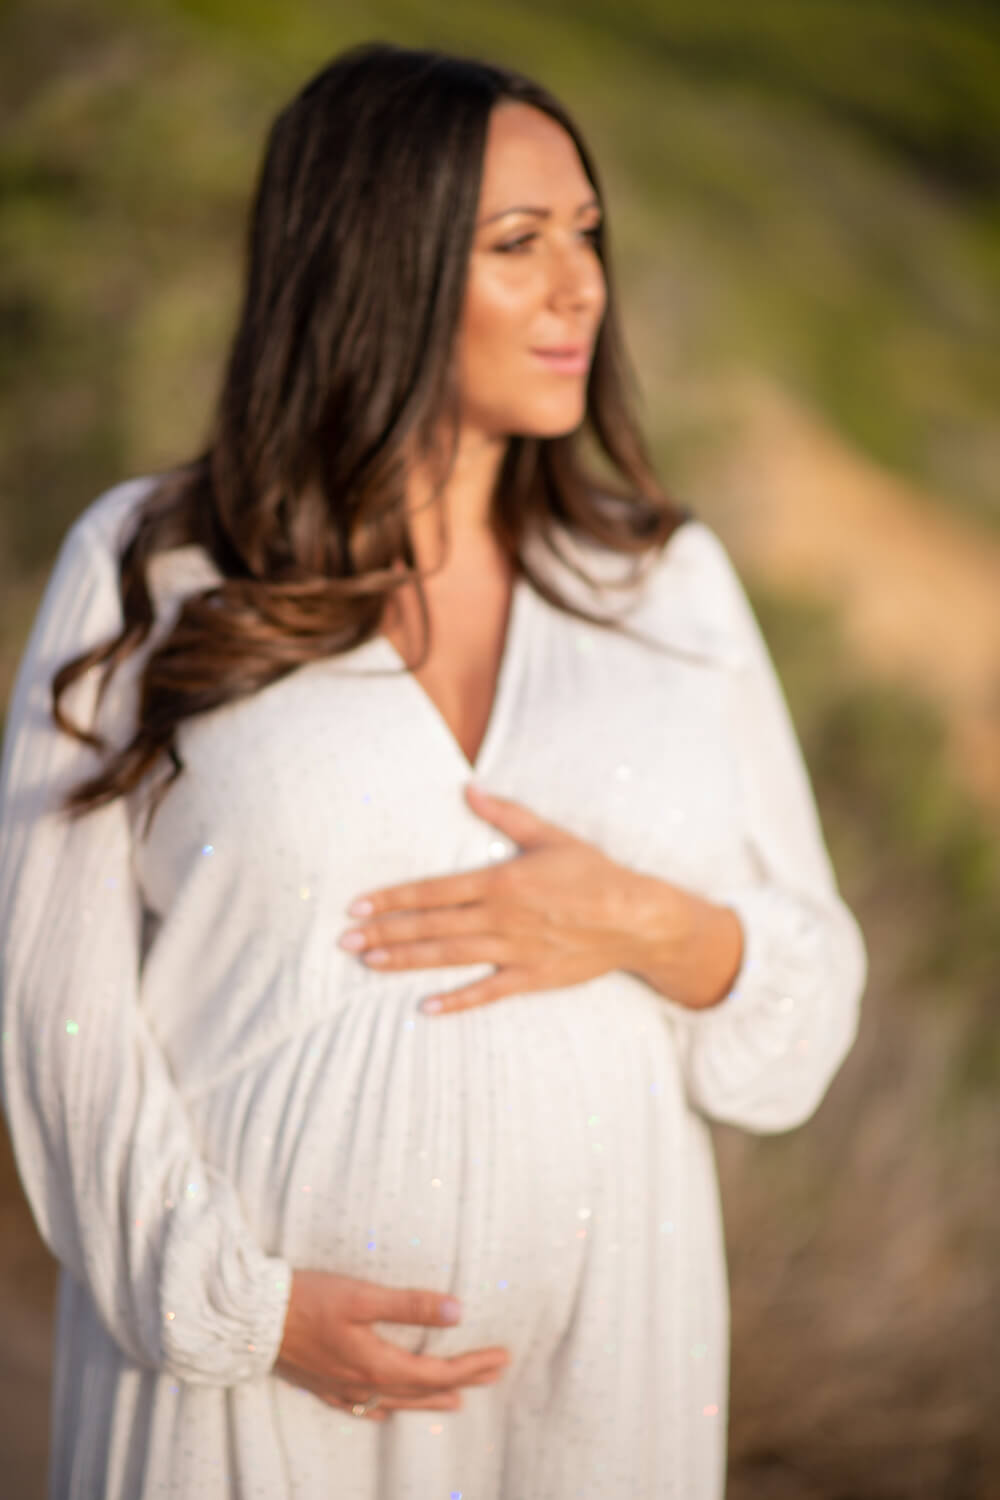 Pregnant maternity shoot overlooking Es Vedra